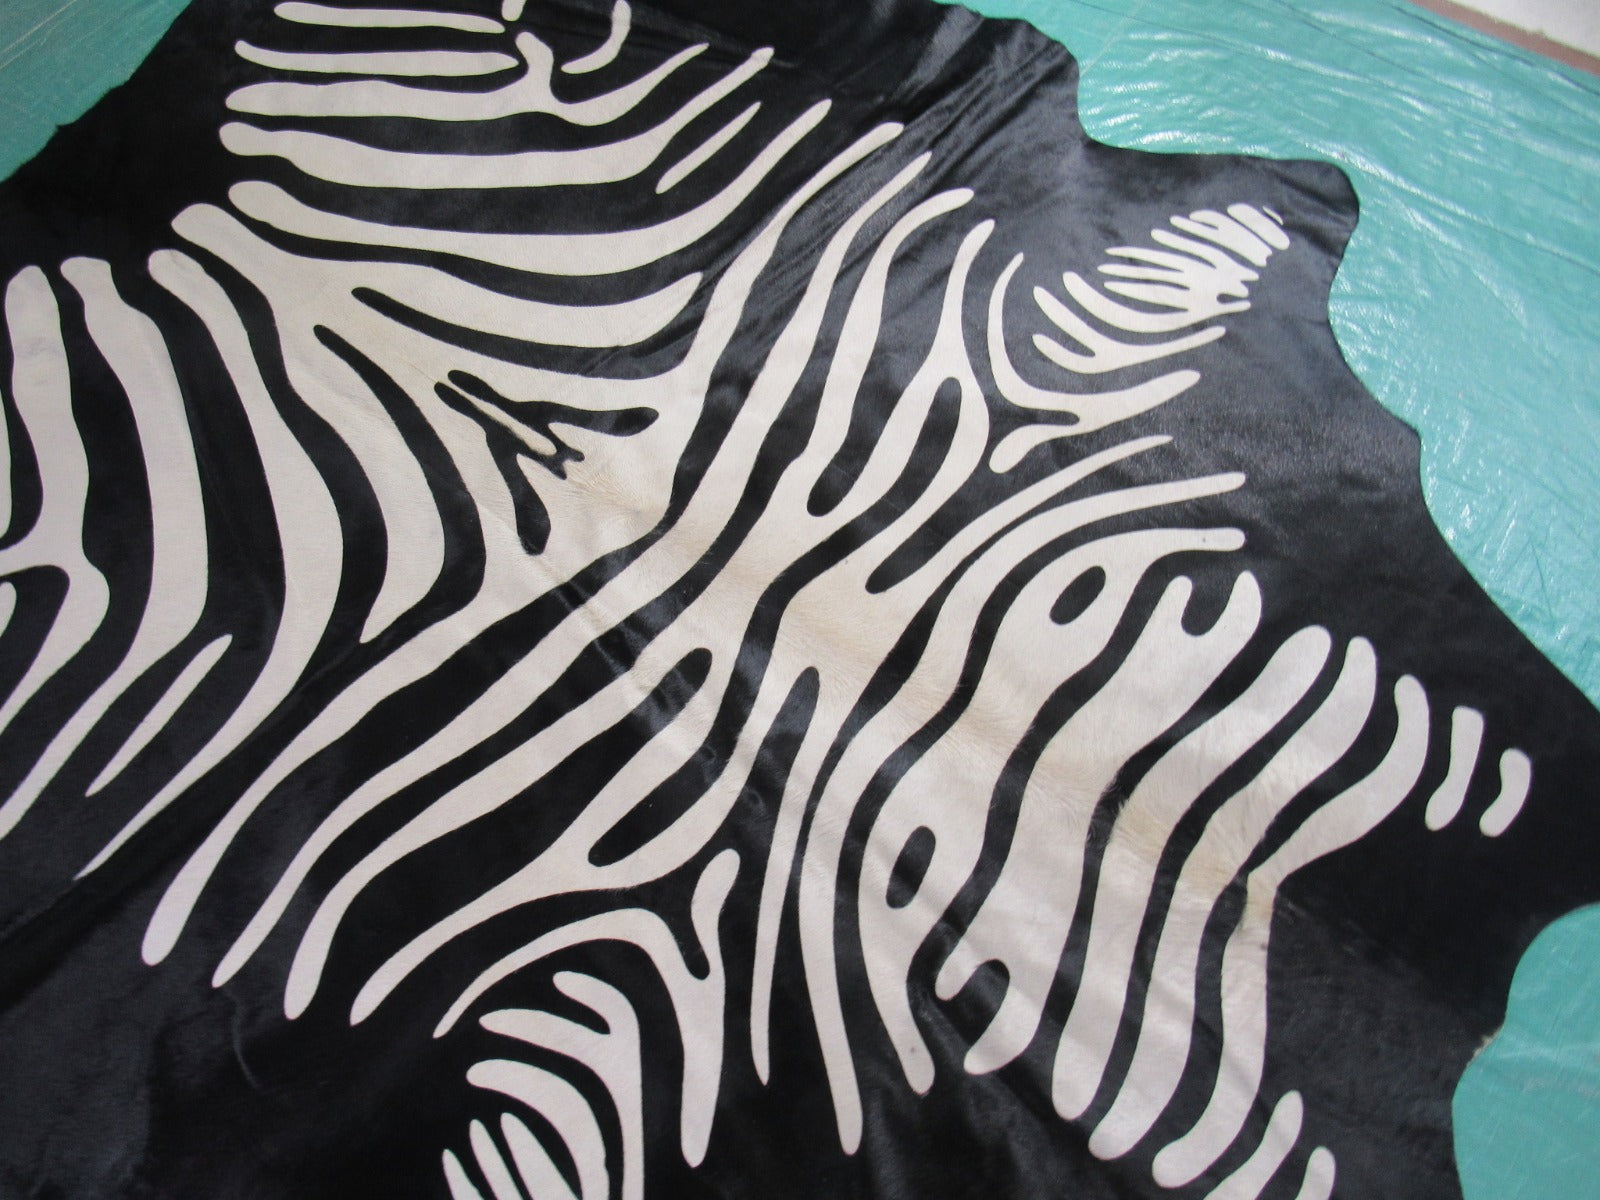 Reverse Zebra Cowhide Rug Size: 6.5x5.5 feet M-1436